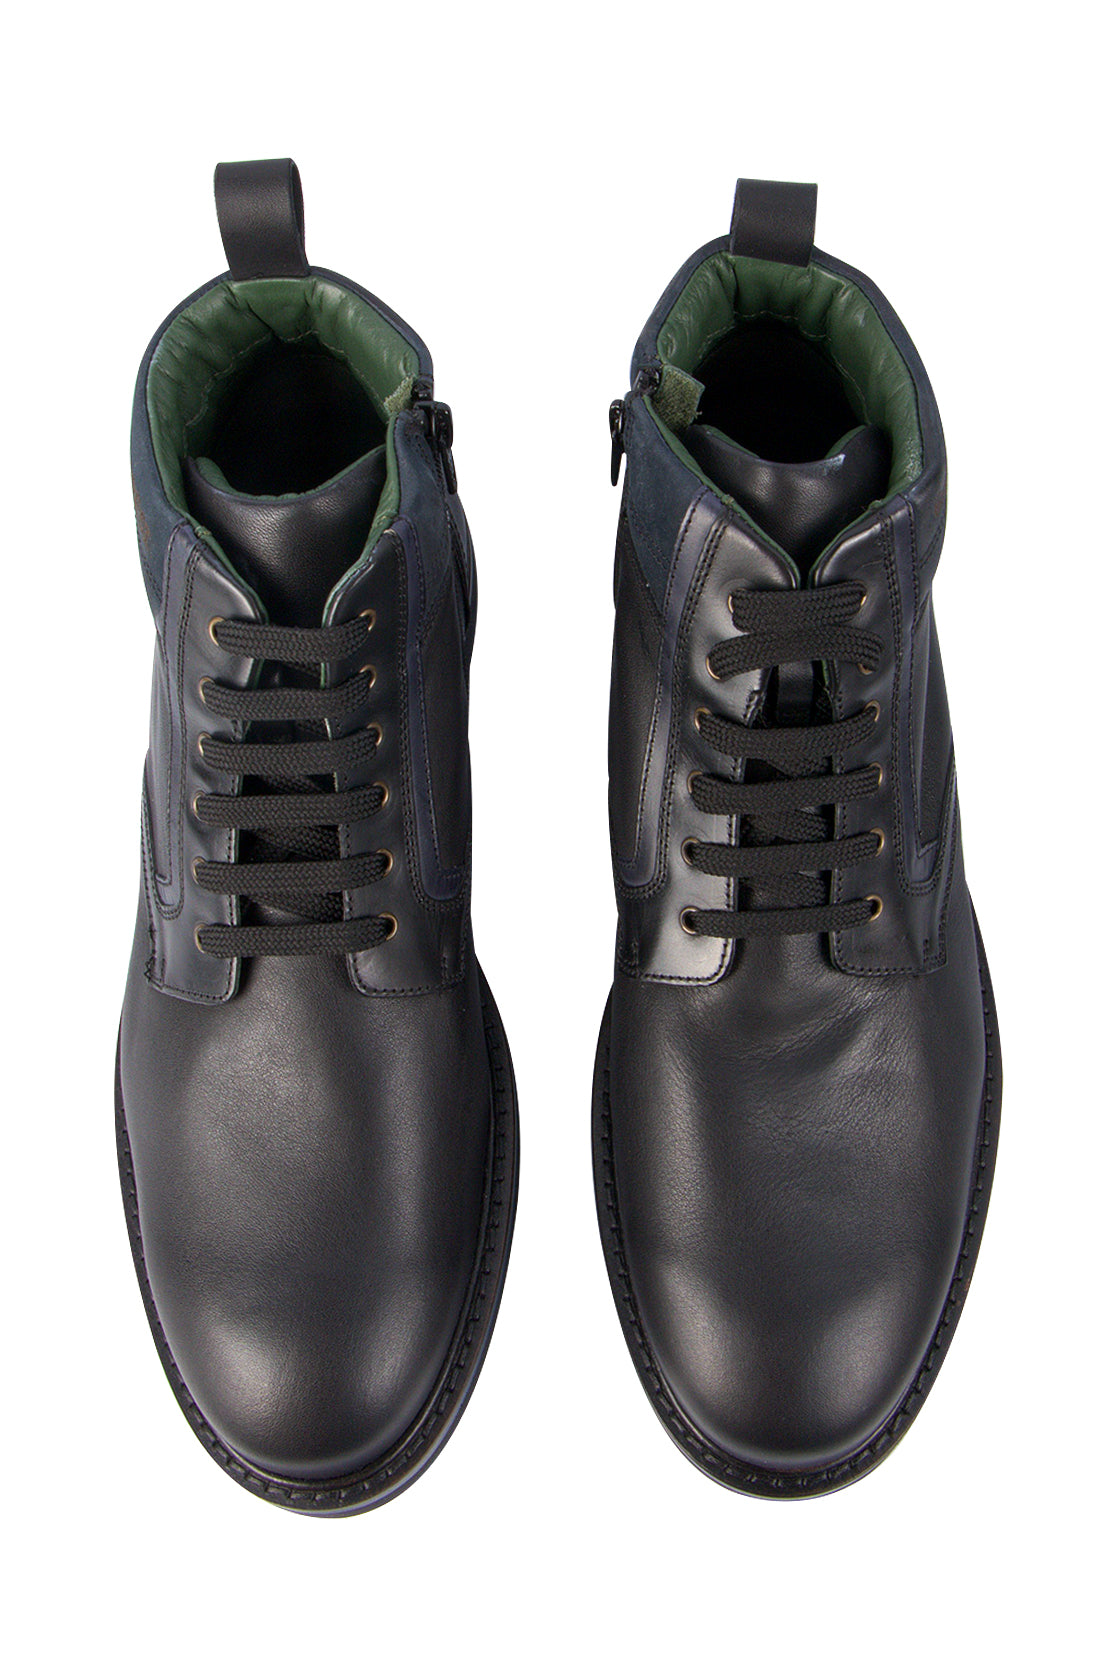 Galizio Torresi Lace Boots Nero/Navy